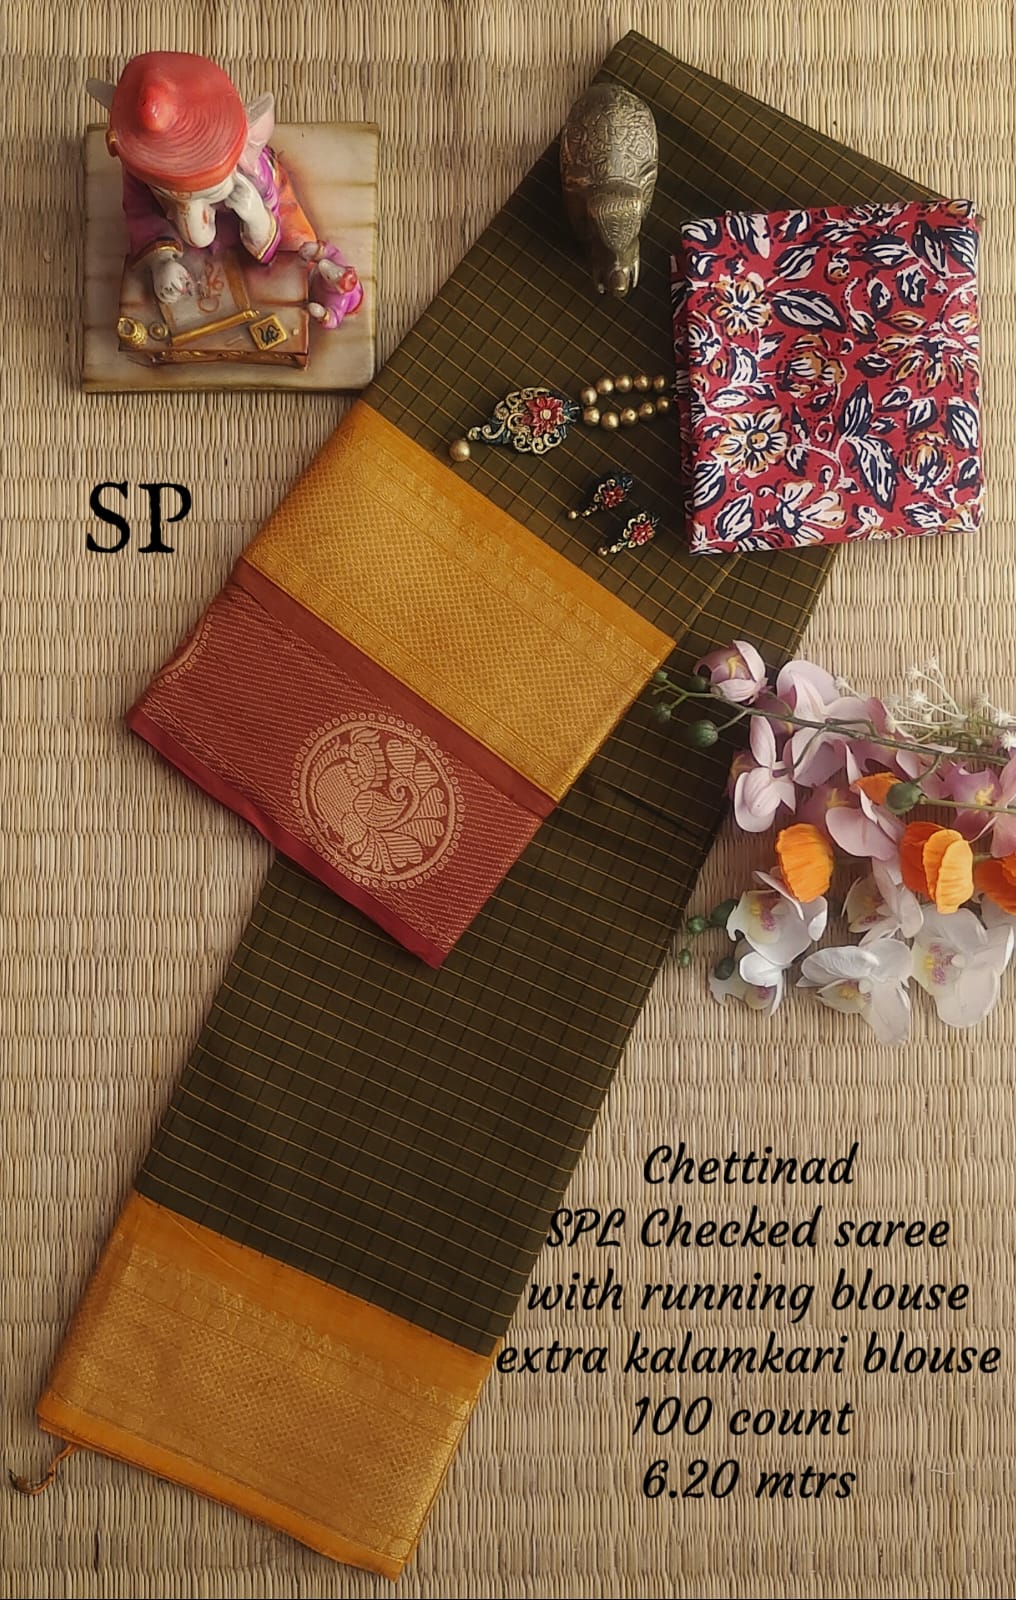 Buy Women's Chettinad Cotton Saree - Temple Border Checked Putta Saree,Checked  Cotton Saree (Dark Maroon) at Amazon.in